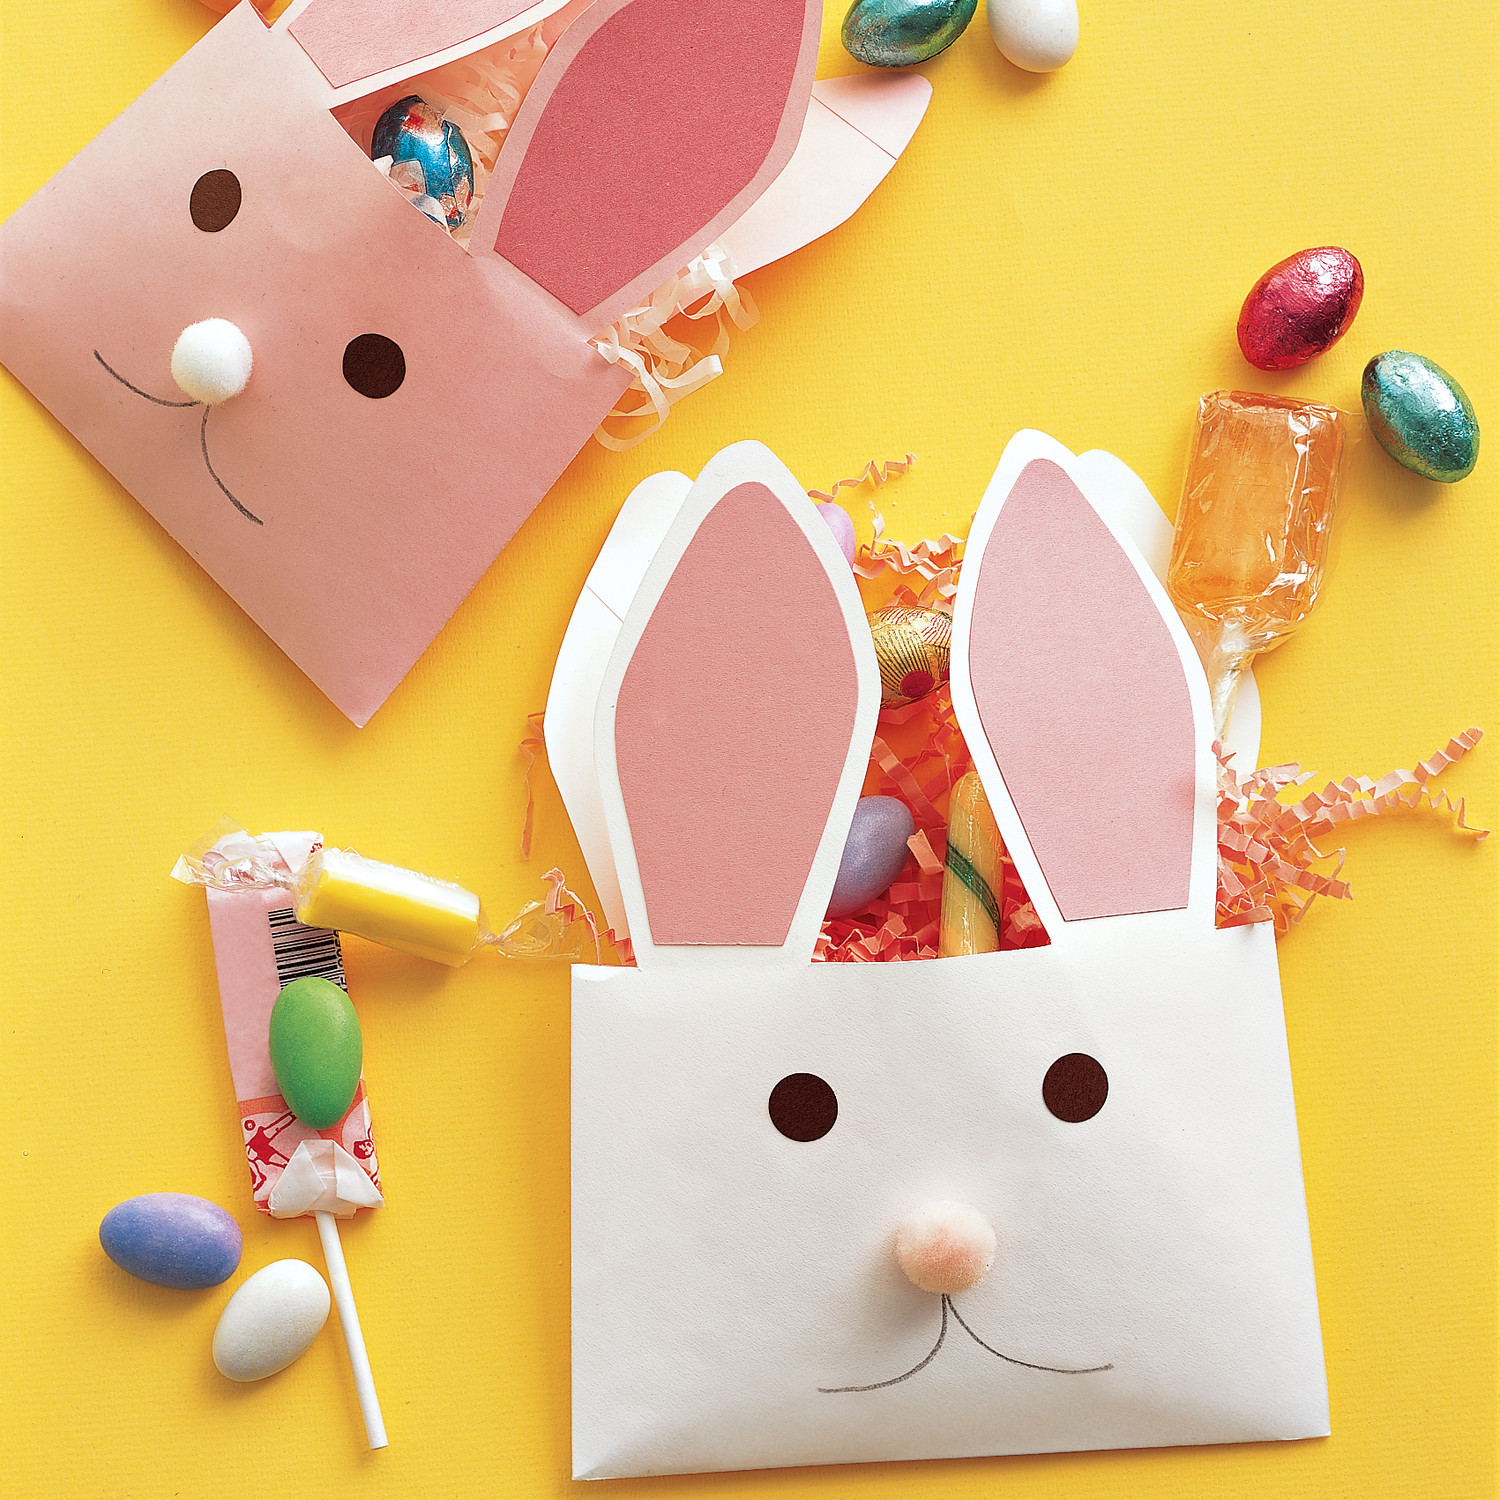 Craft Activities For Preschoolers
 The Best Easter Crafts and Activities for Kids